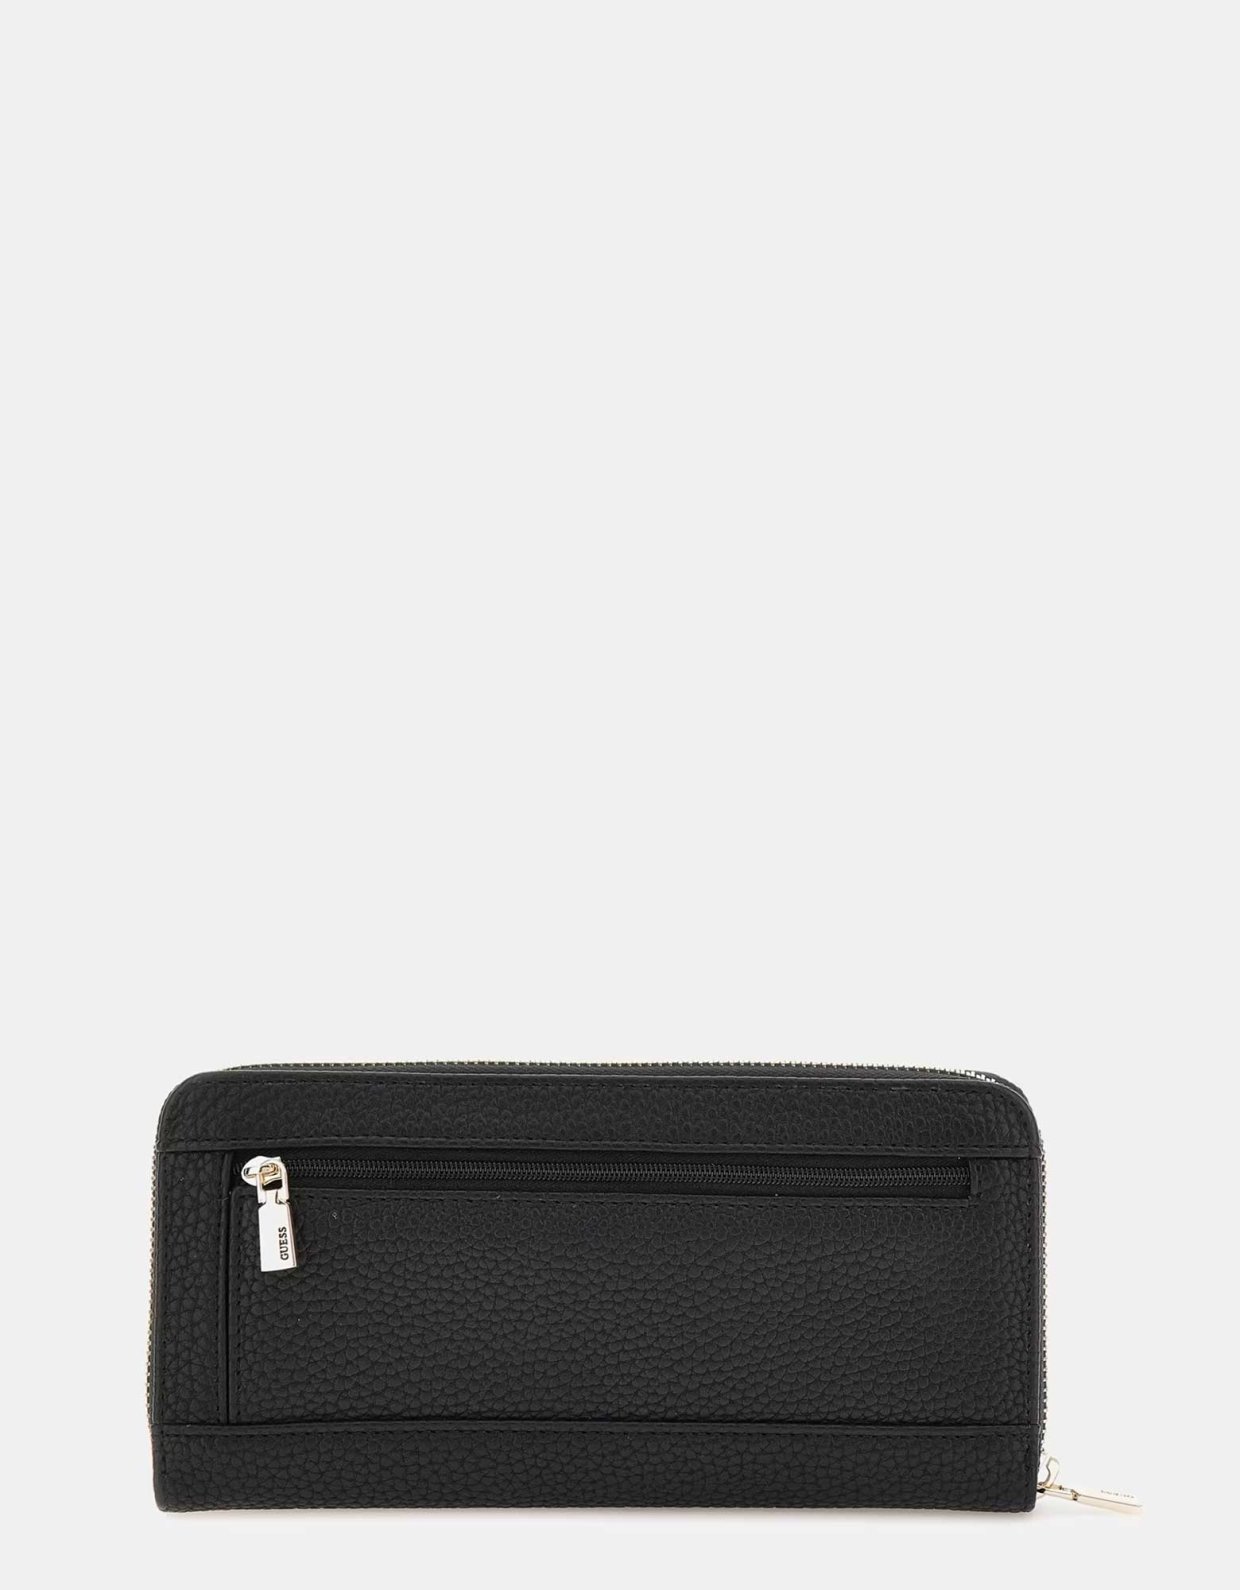 Guess Eco brenton maxi wallet black